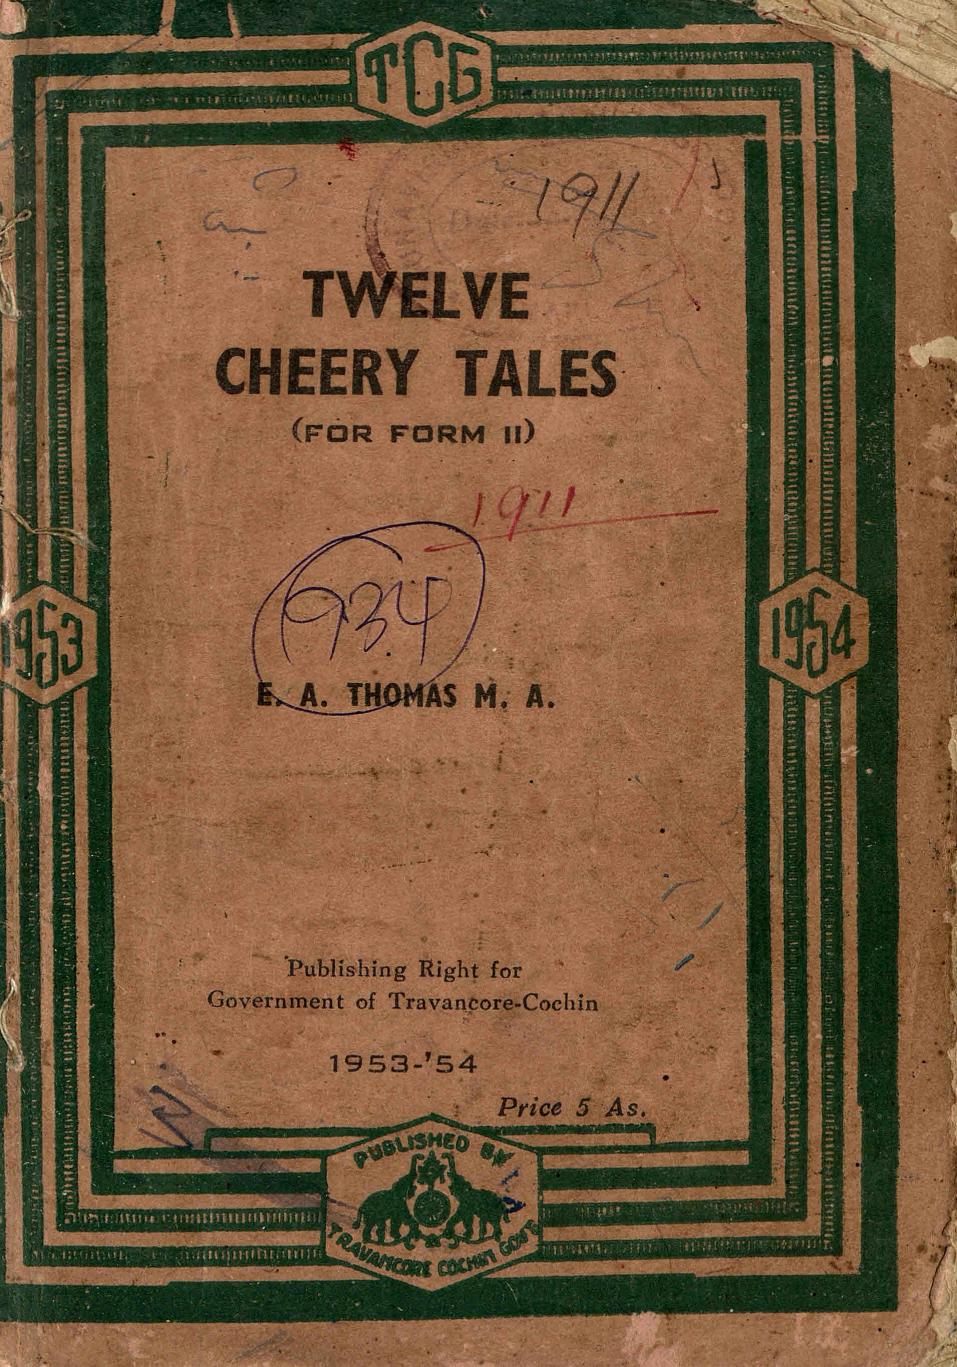 1953 - Twelve Cheery Tales - E. A. Thomas